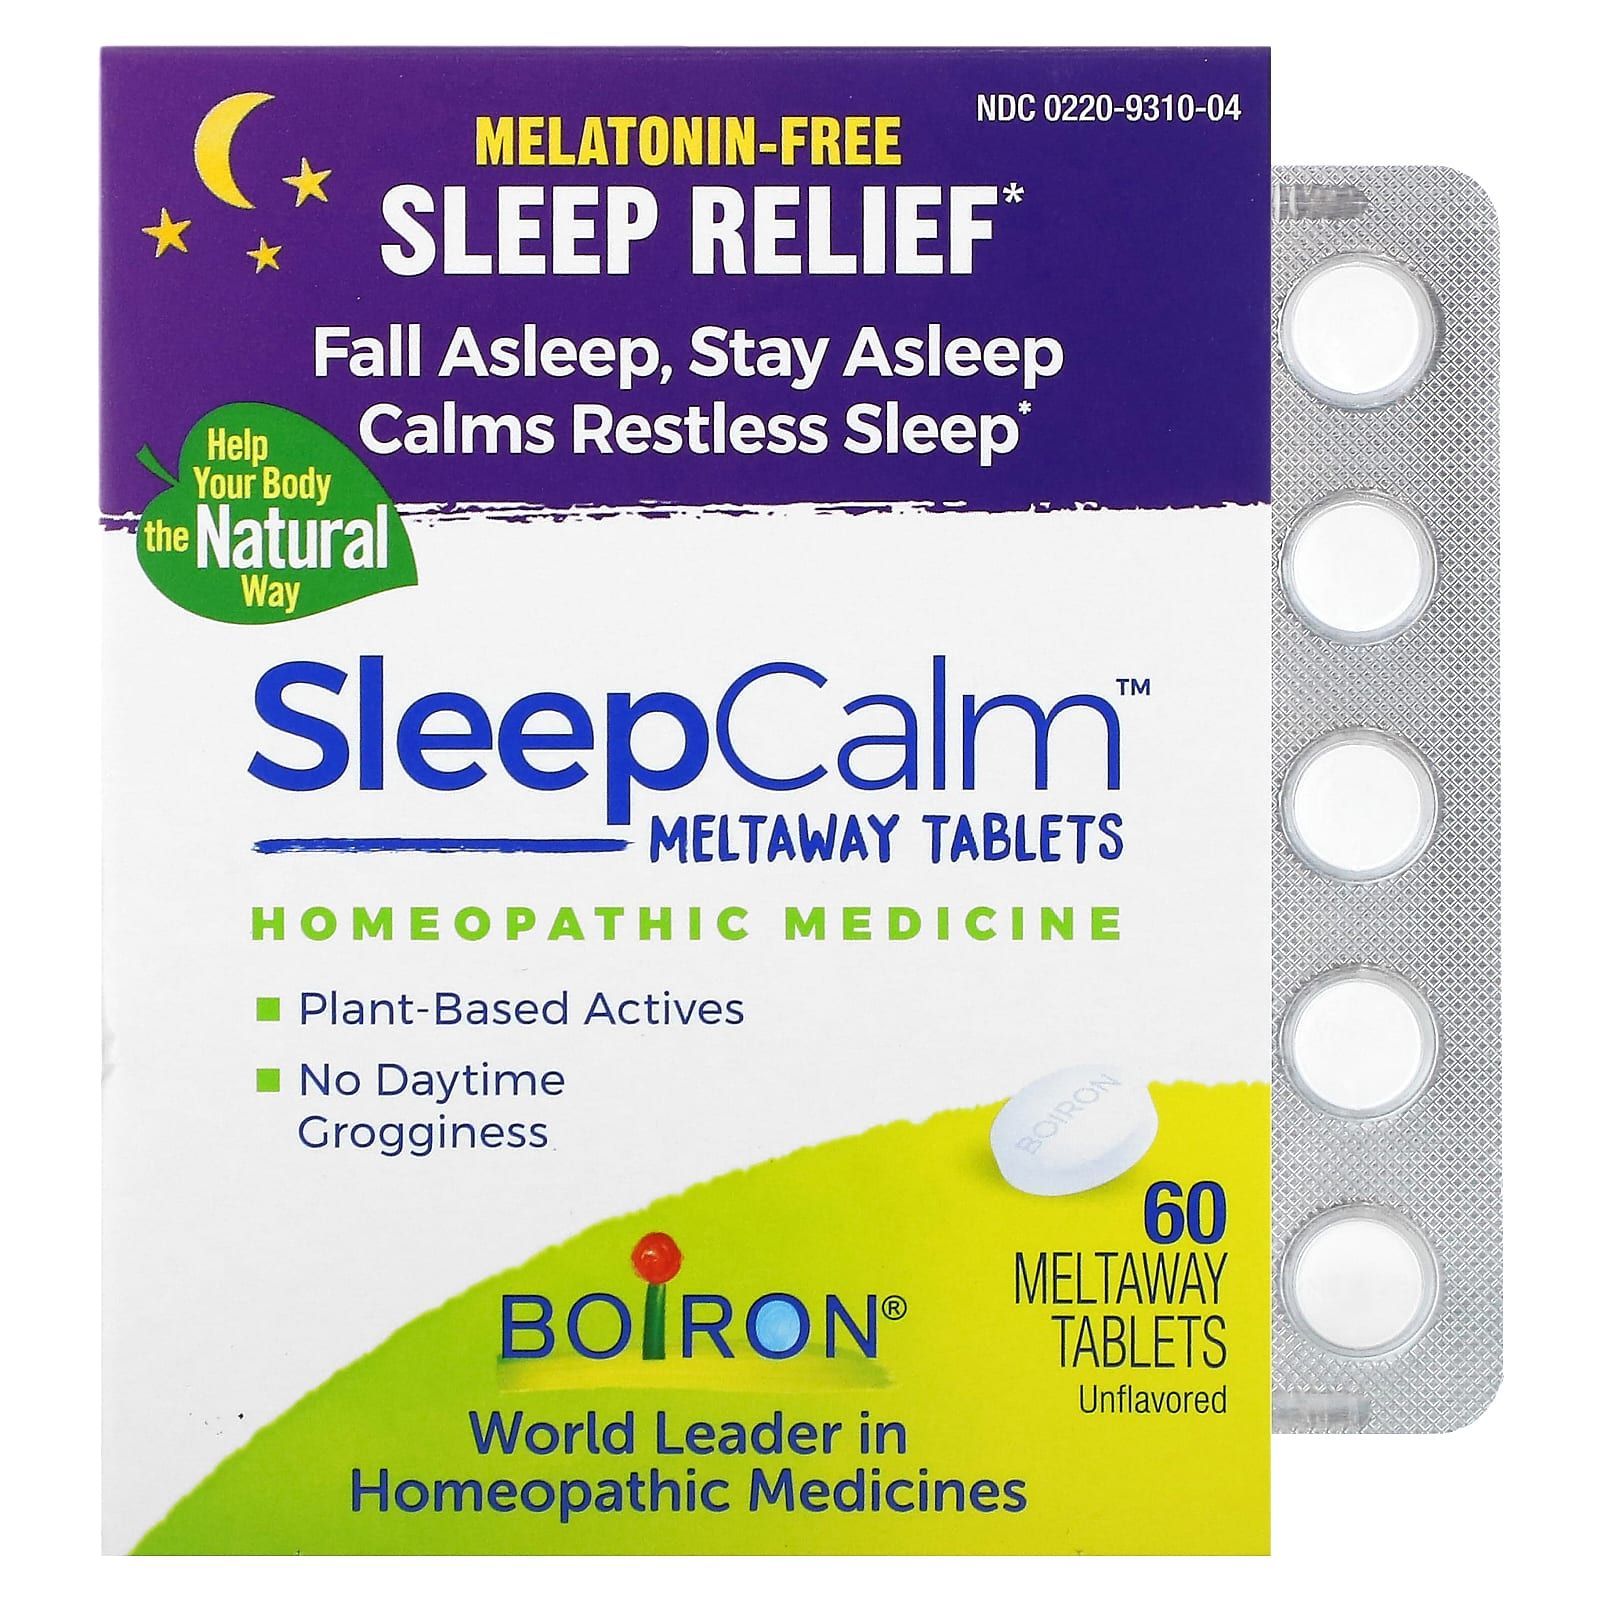 Boiron Sleep Calm Meltaway Tablets Unflavored 60 Meltaway Tablets boiron таблетки meltaway для спокойного сна без ароматизаторов 60 таблеток meltaway